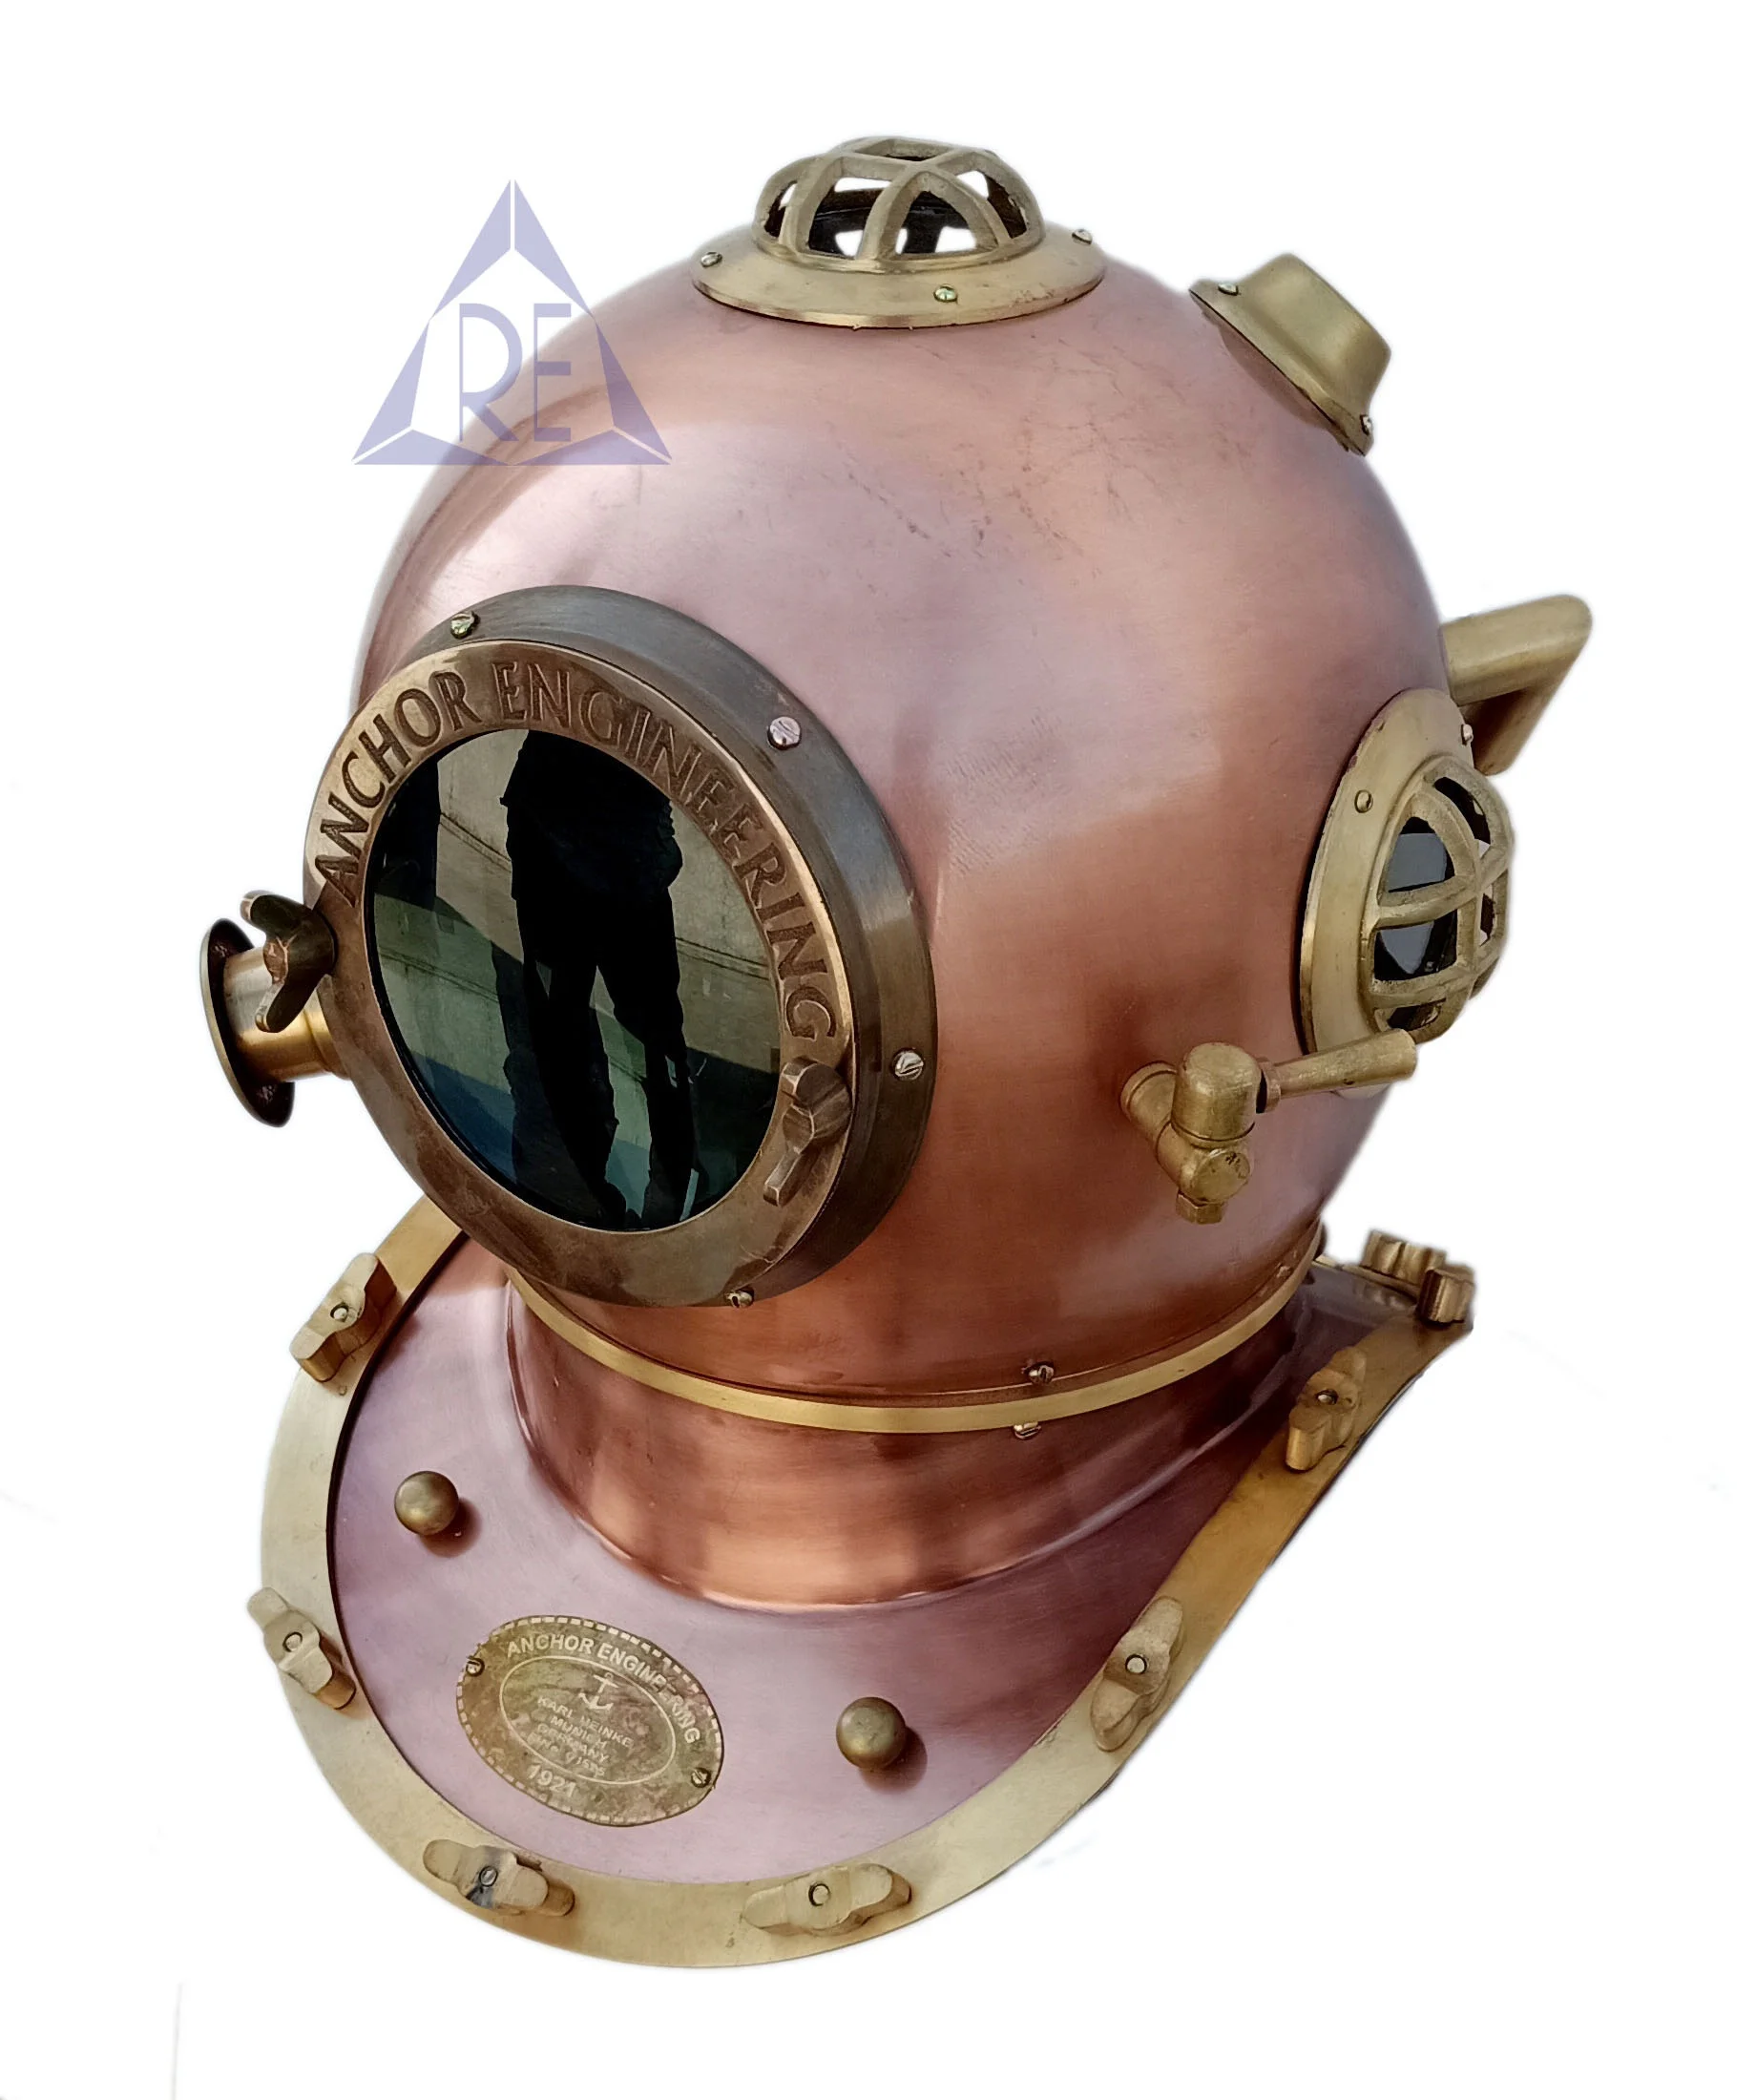 Details about   Vintage antique 18 Inch diving divers helmet deep sea anchor engineering 